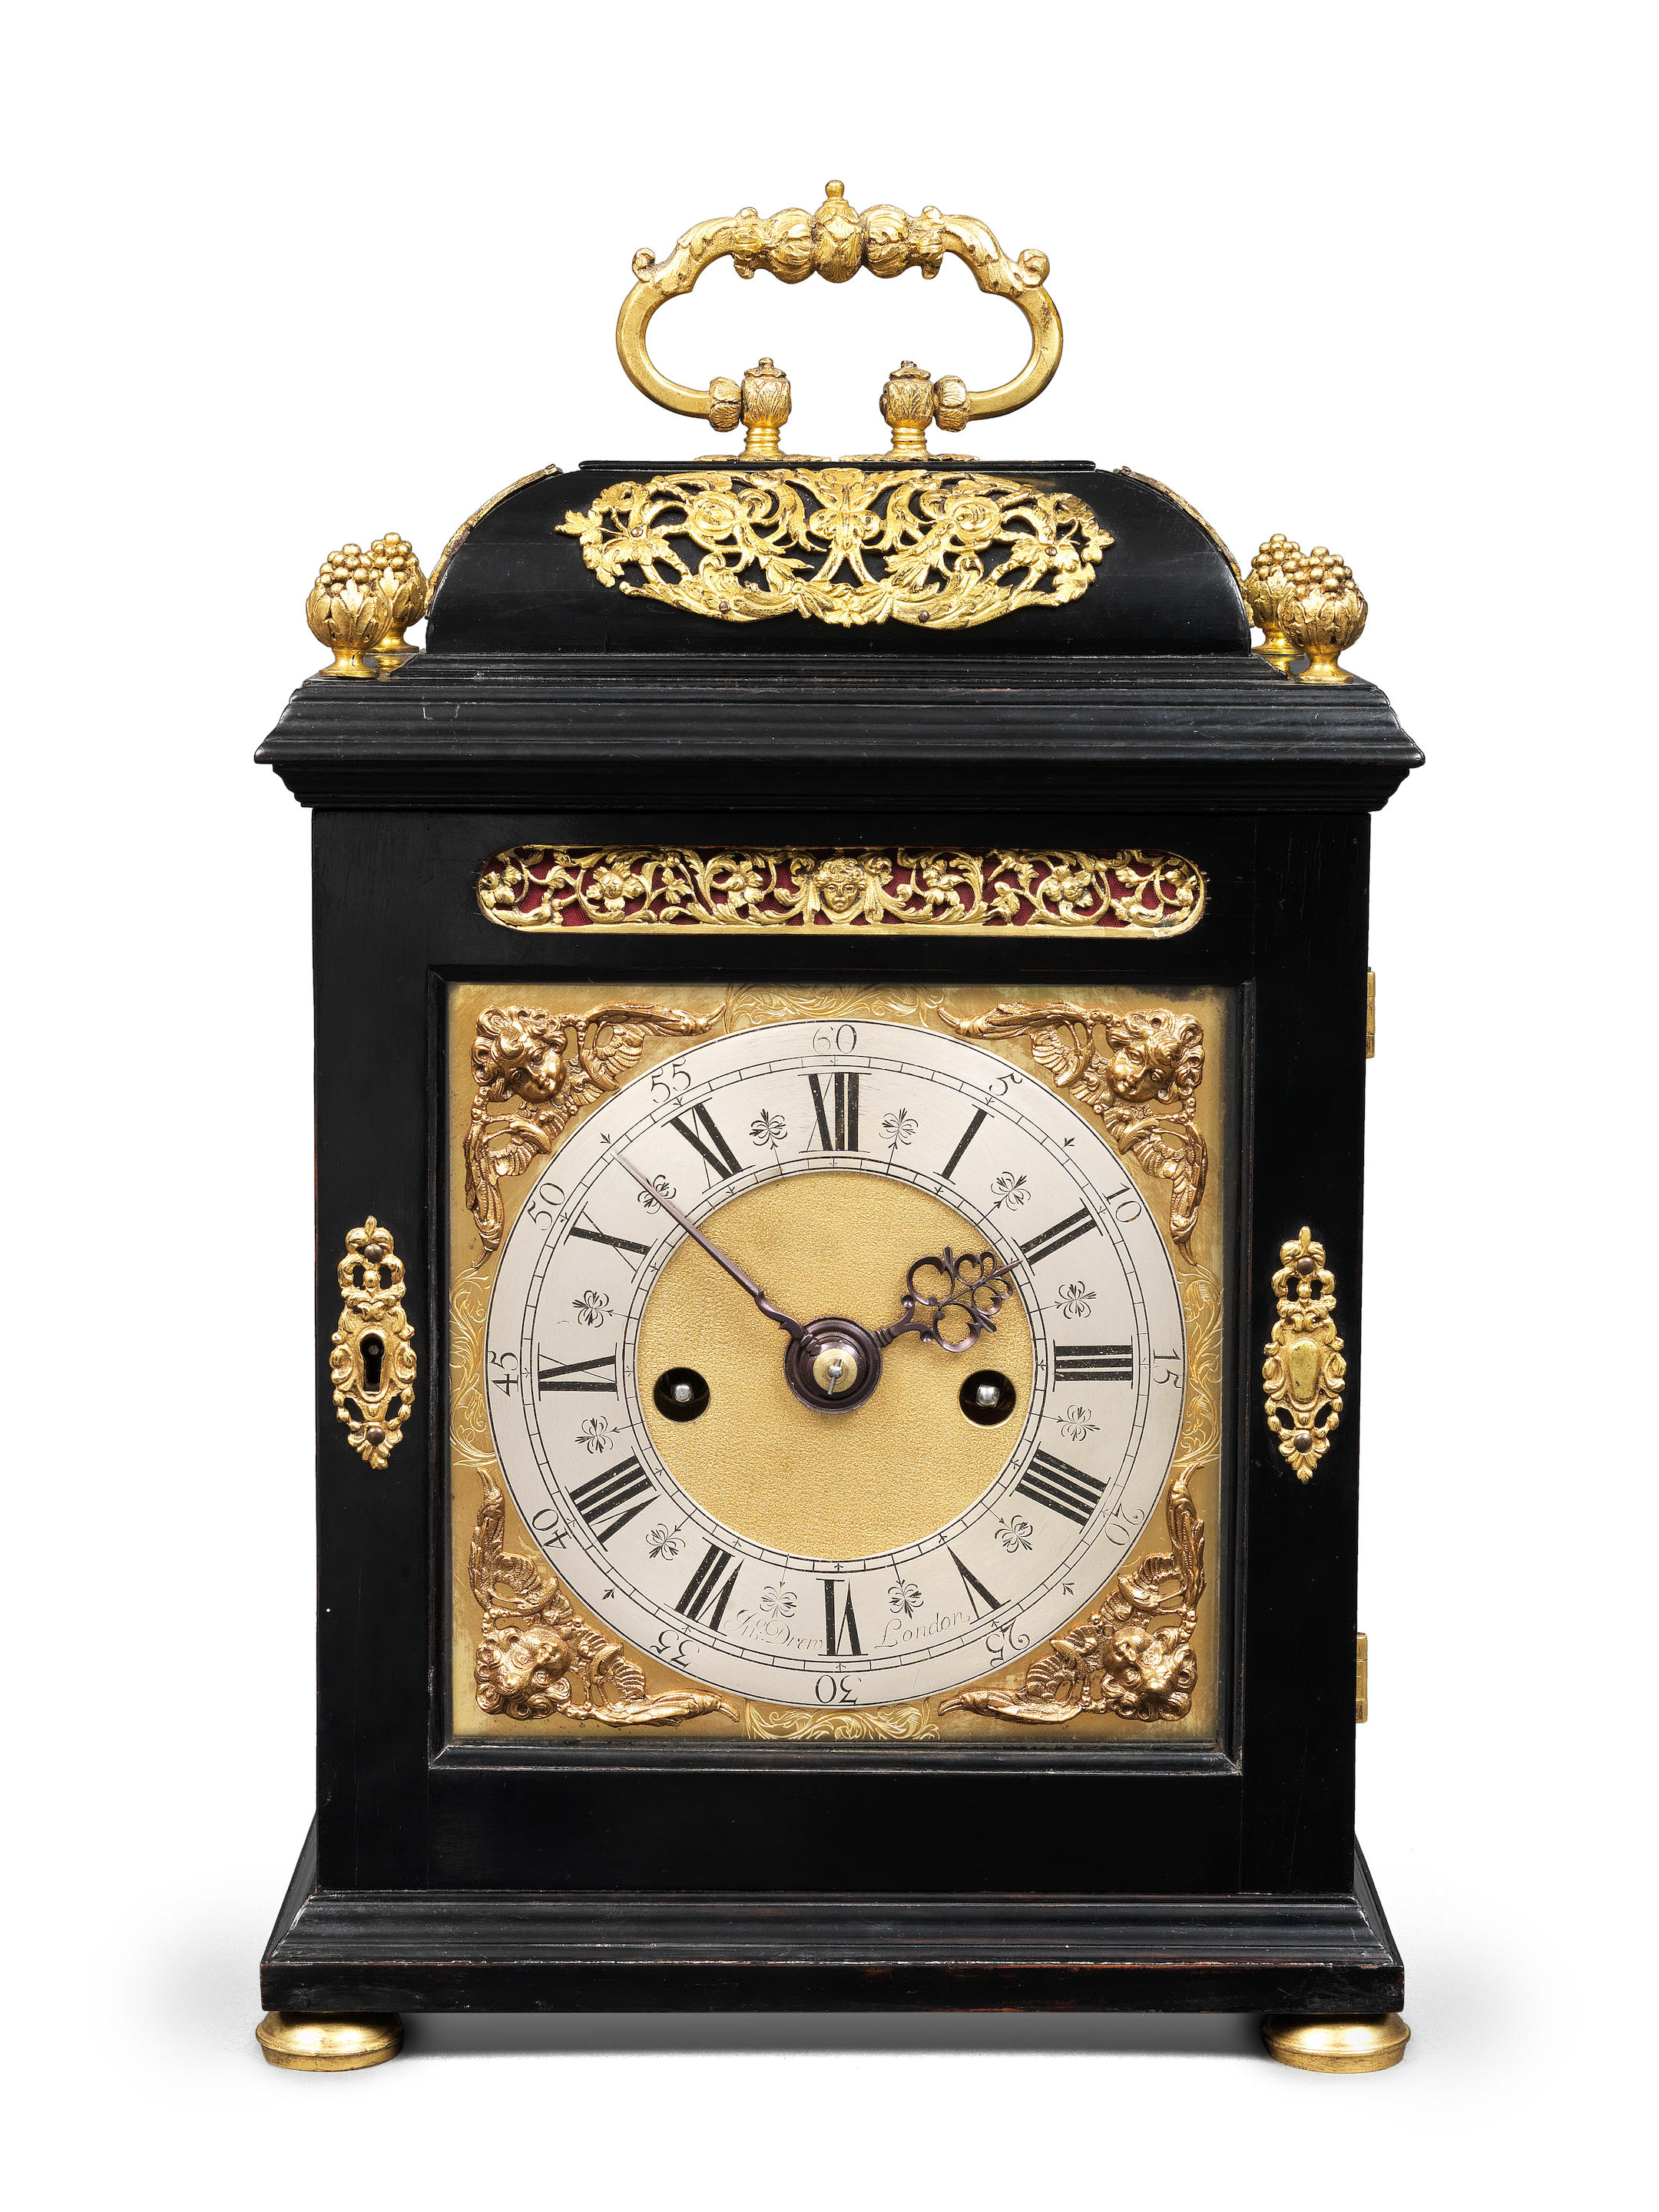 Sold at Auction: Clocks, TRAVEL ALARM CLOCK FRANCE BRAS